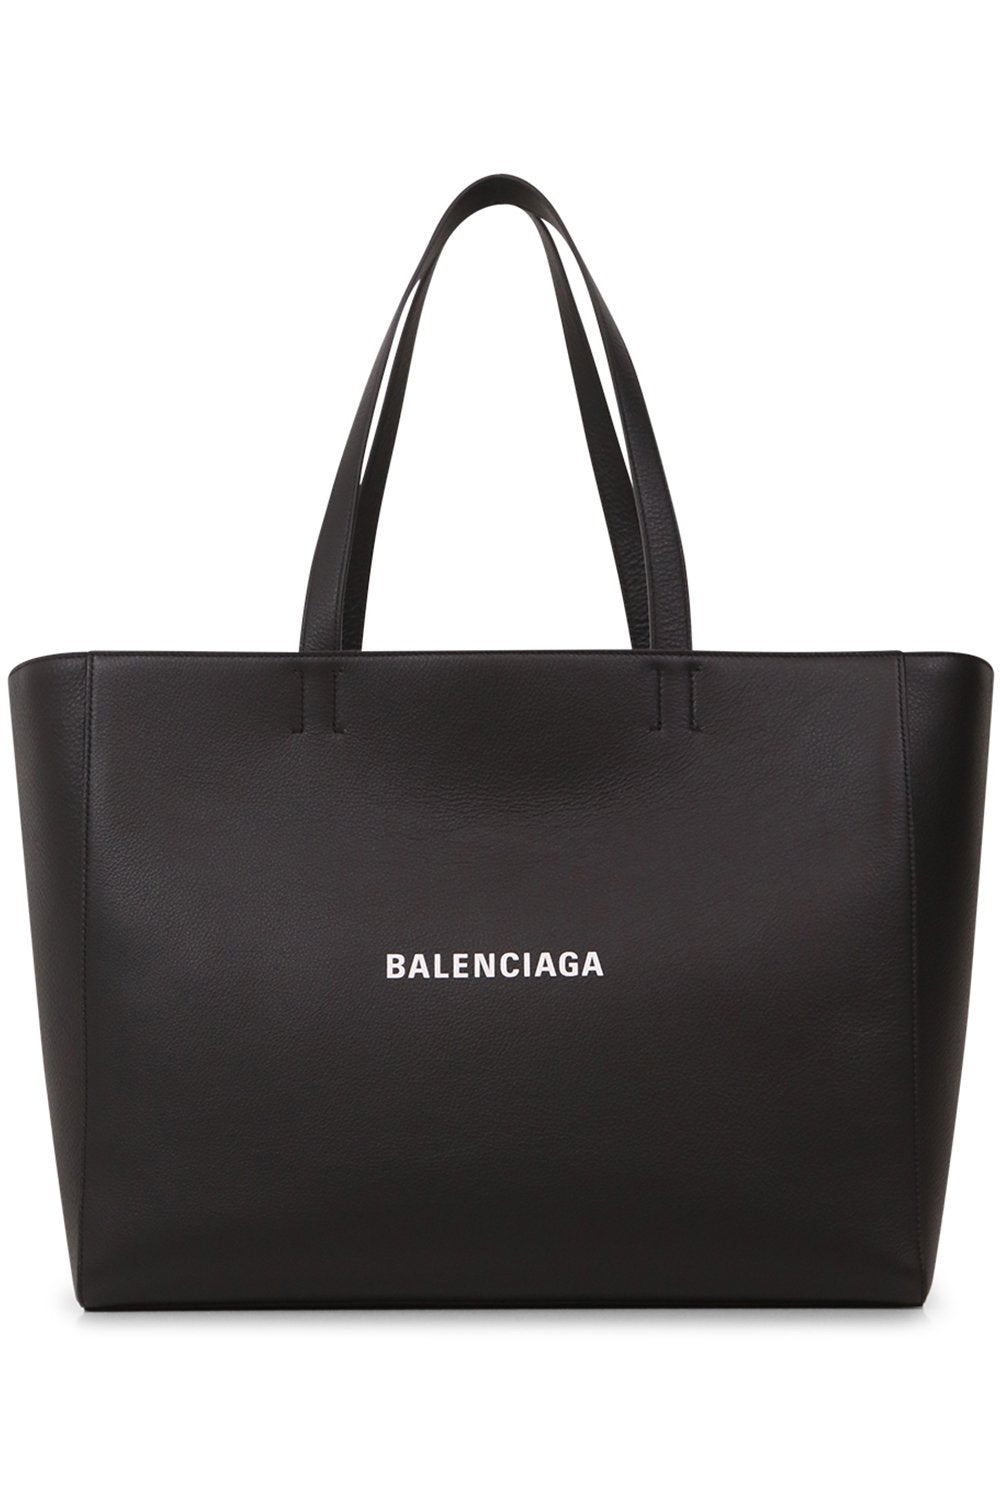 BALENCIAGA BAGS BLACK EVERYDAY EAST/WEST TOTE BAG | BLACK